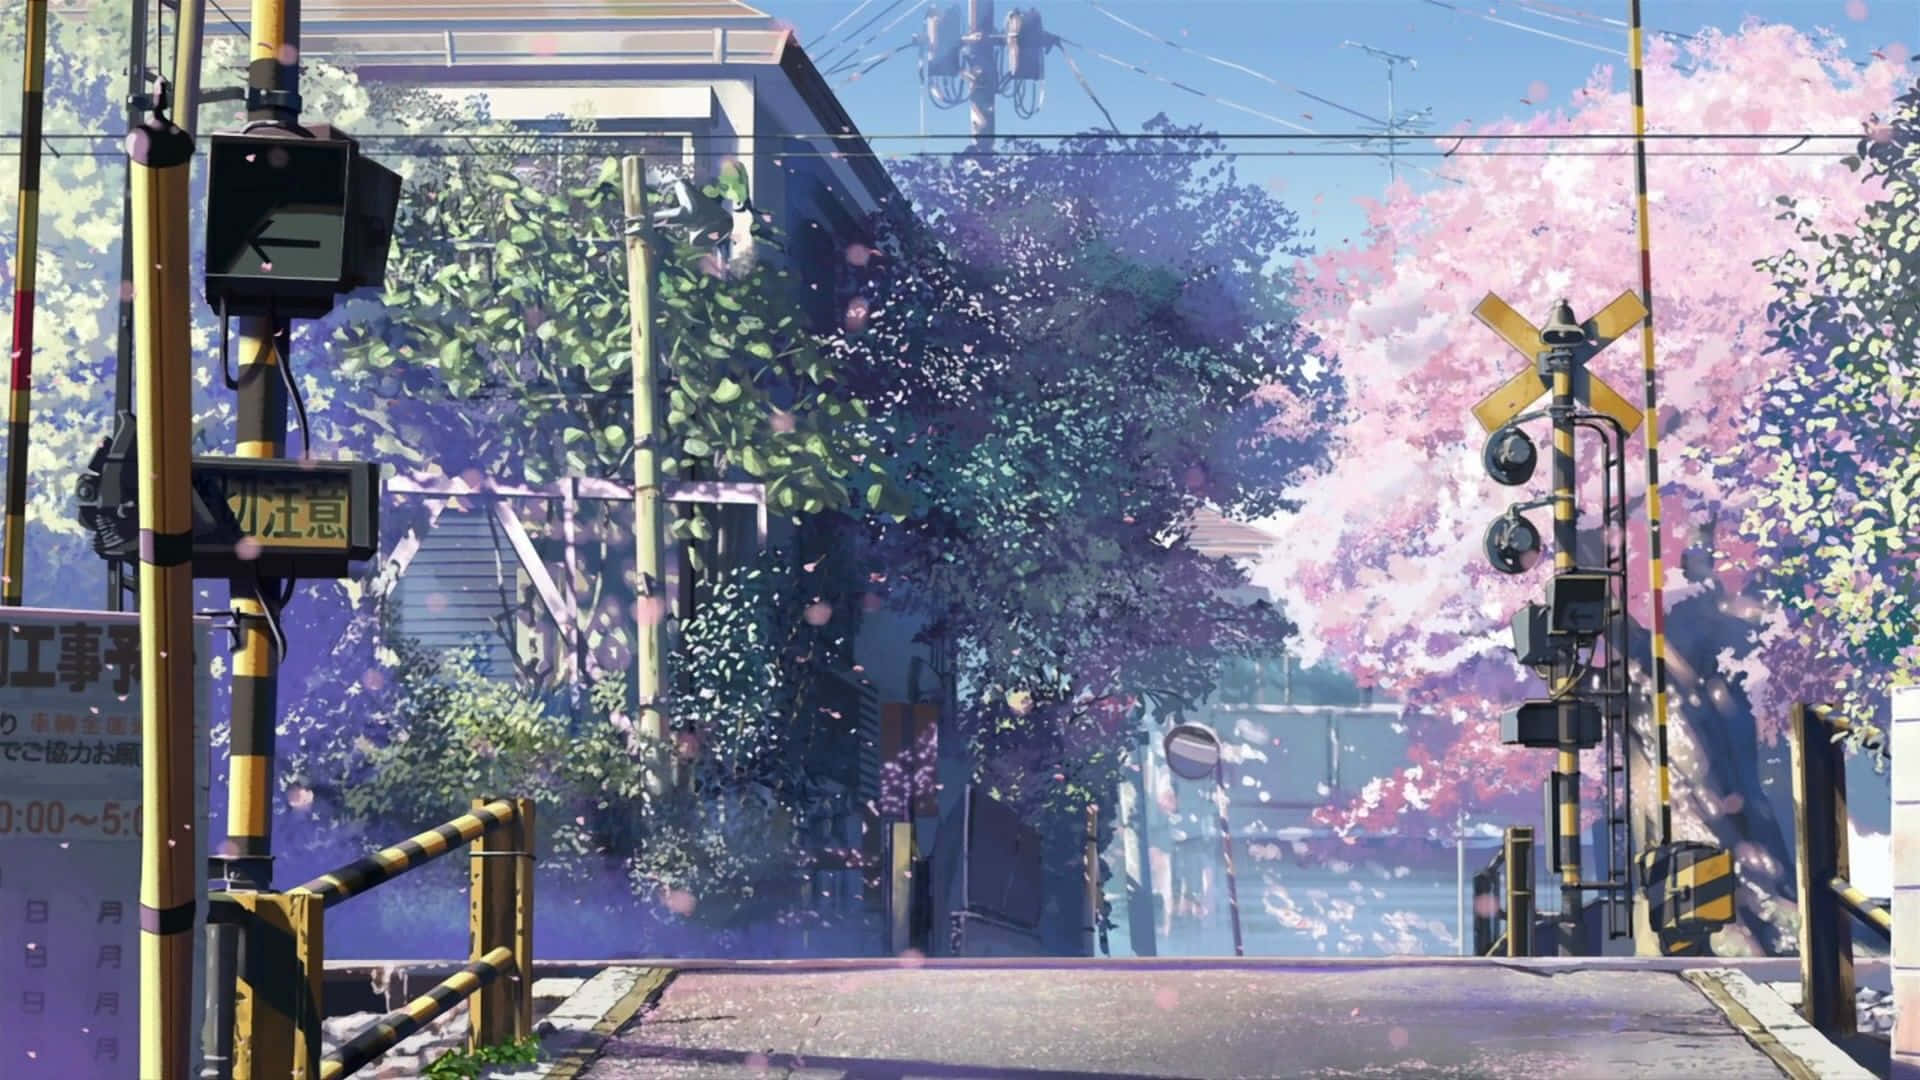 Anime Landscape HD Wallpaper by fom lifotai